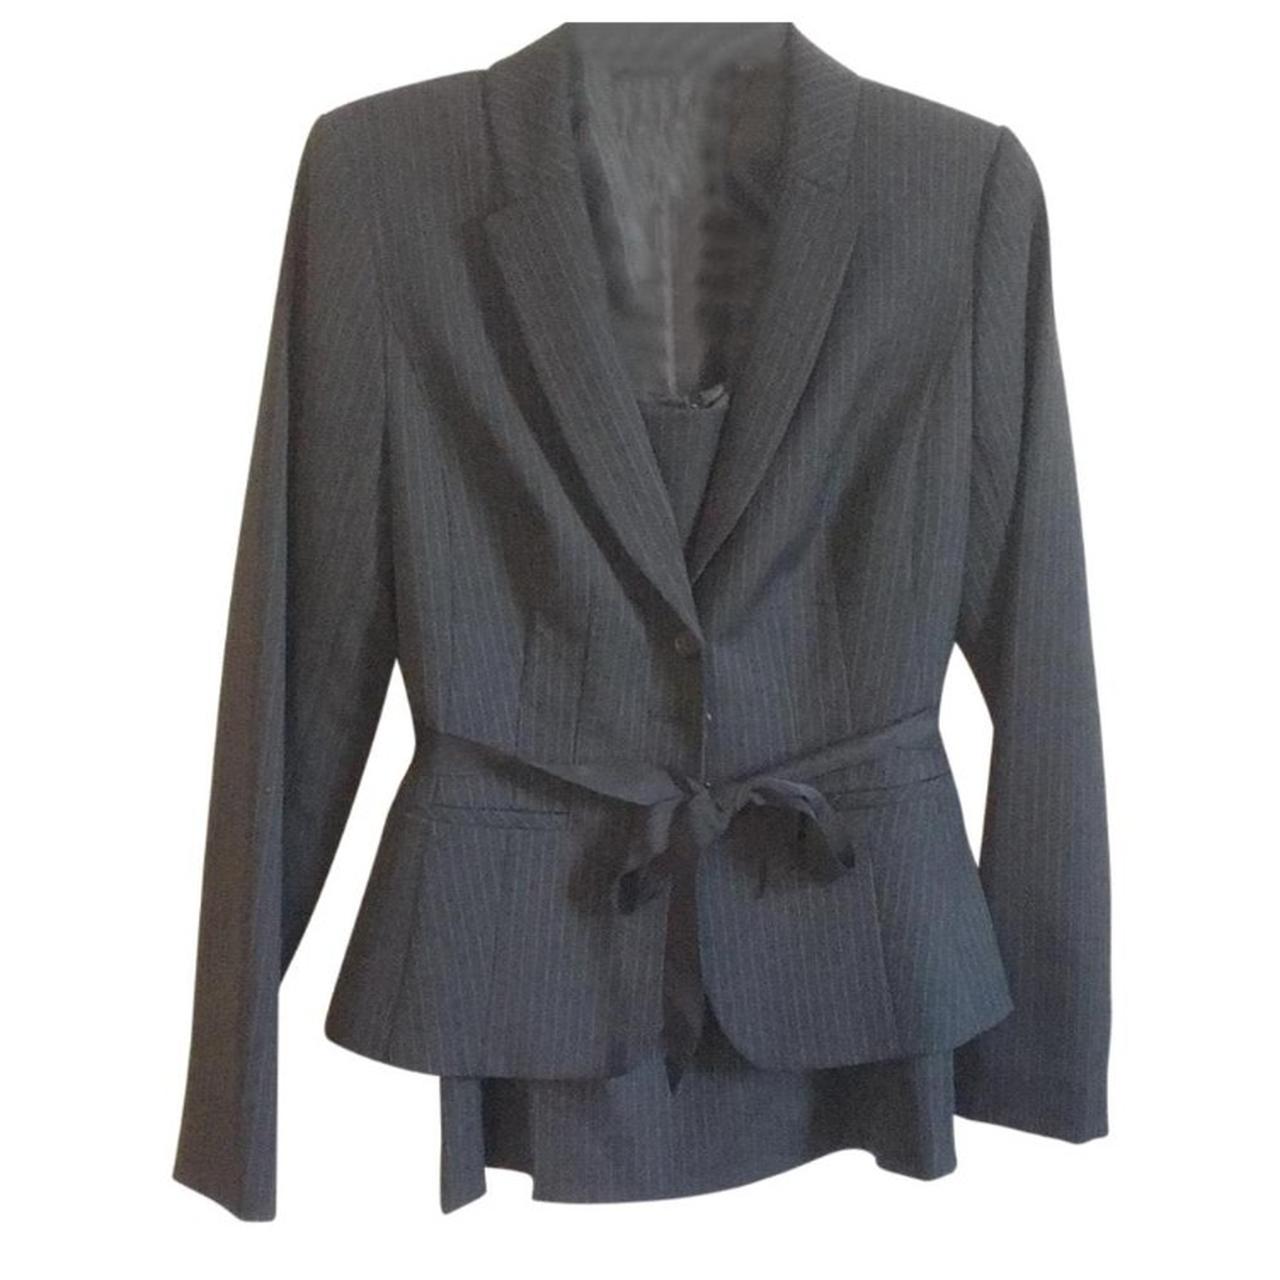 Gorgeous Halogen pinstripe business suit with button... - Depop